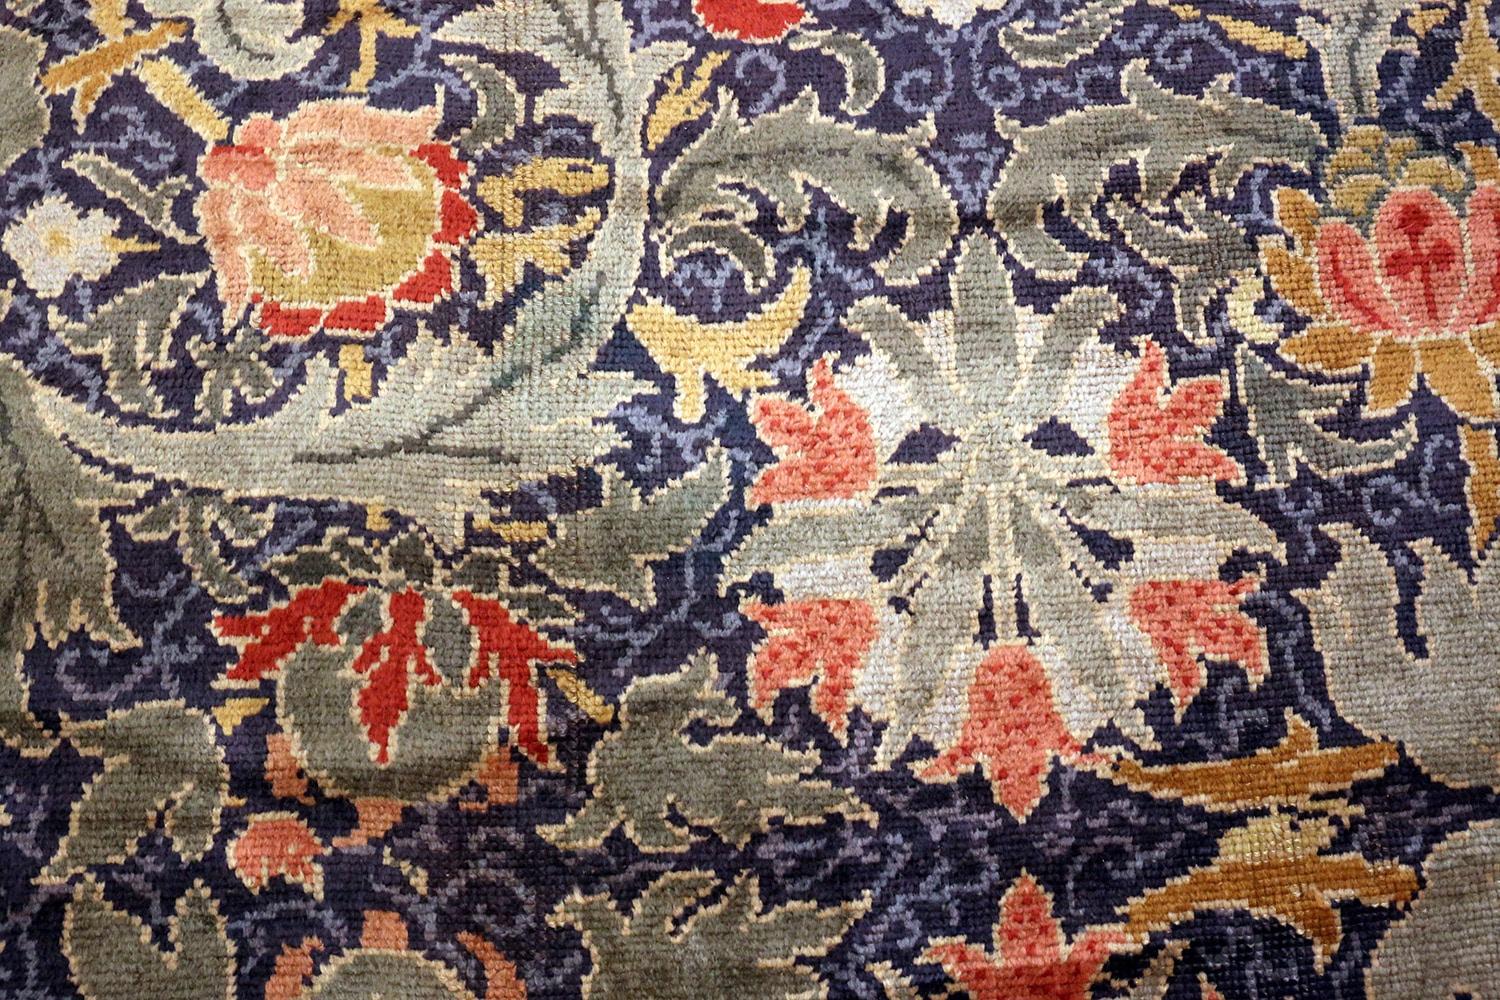 Magnificent and rare large oversized antique Arts & Crafts William Morris Design rug, country of origin / rug type: Irish rug, circa date: Late 19th century. Size: 19 ft x 30 ft (5.79 m x 9.14 m)

